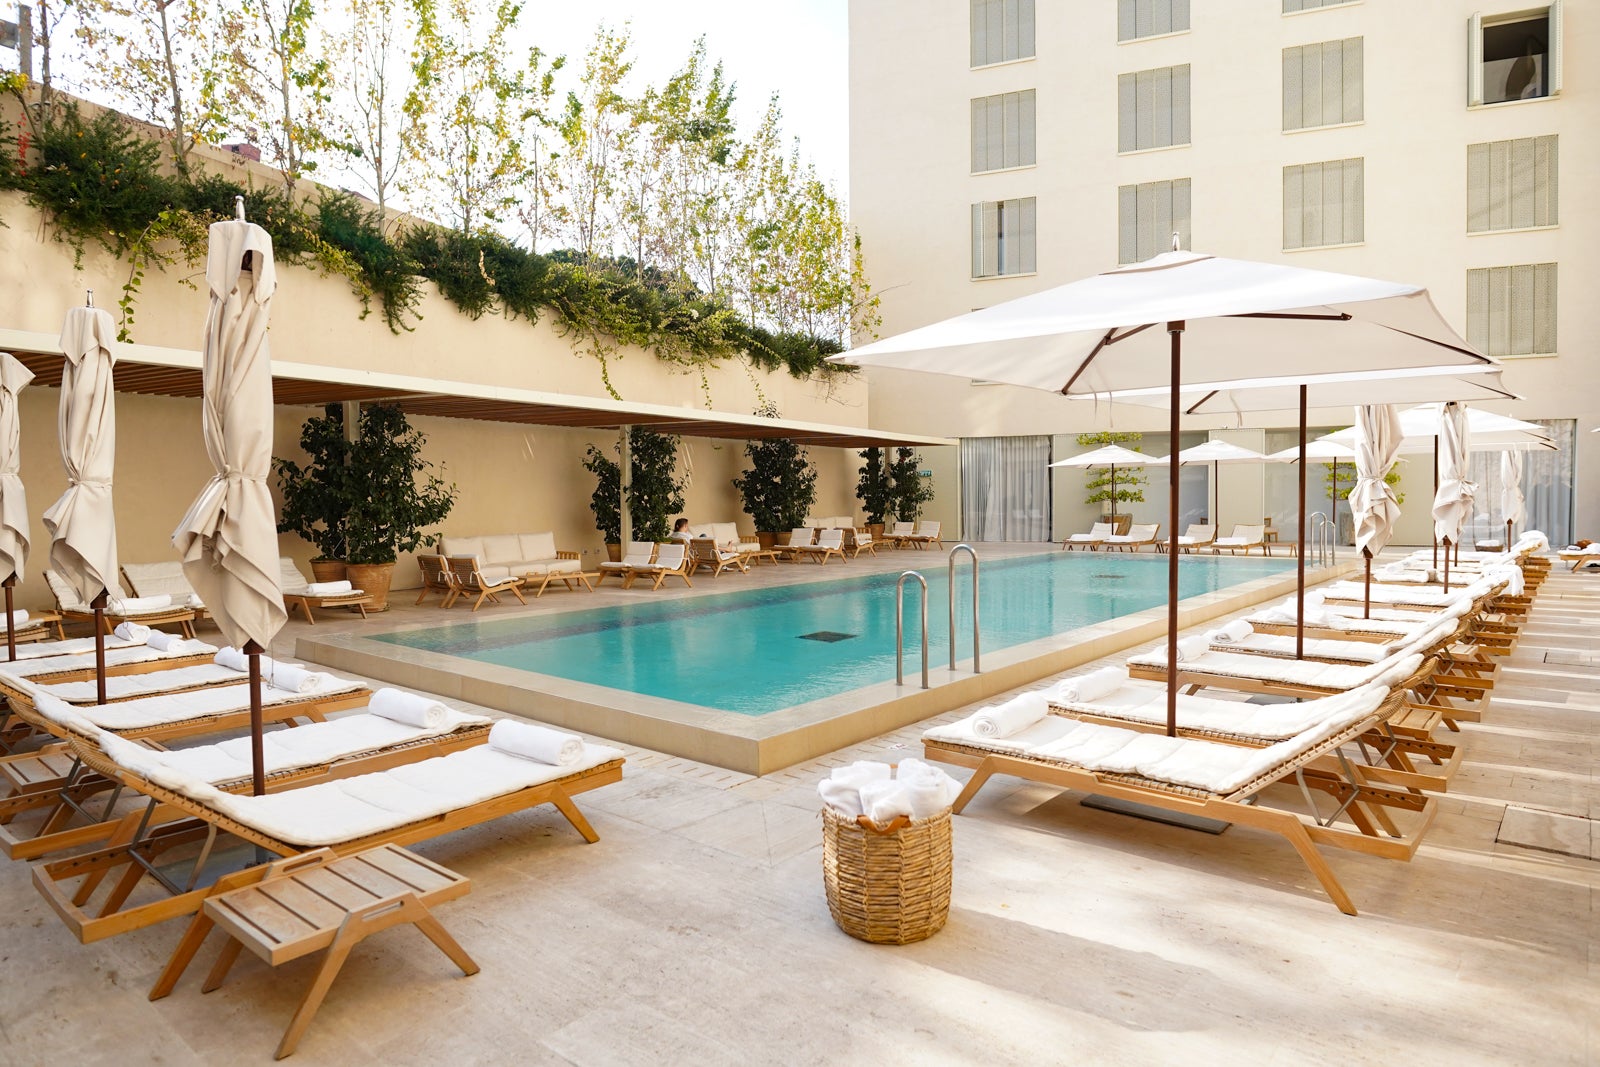 The Jaffa Hotel pool